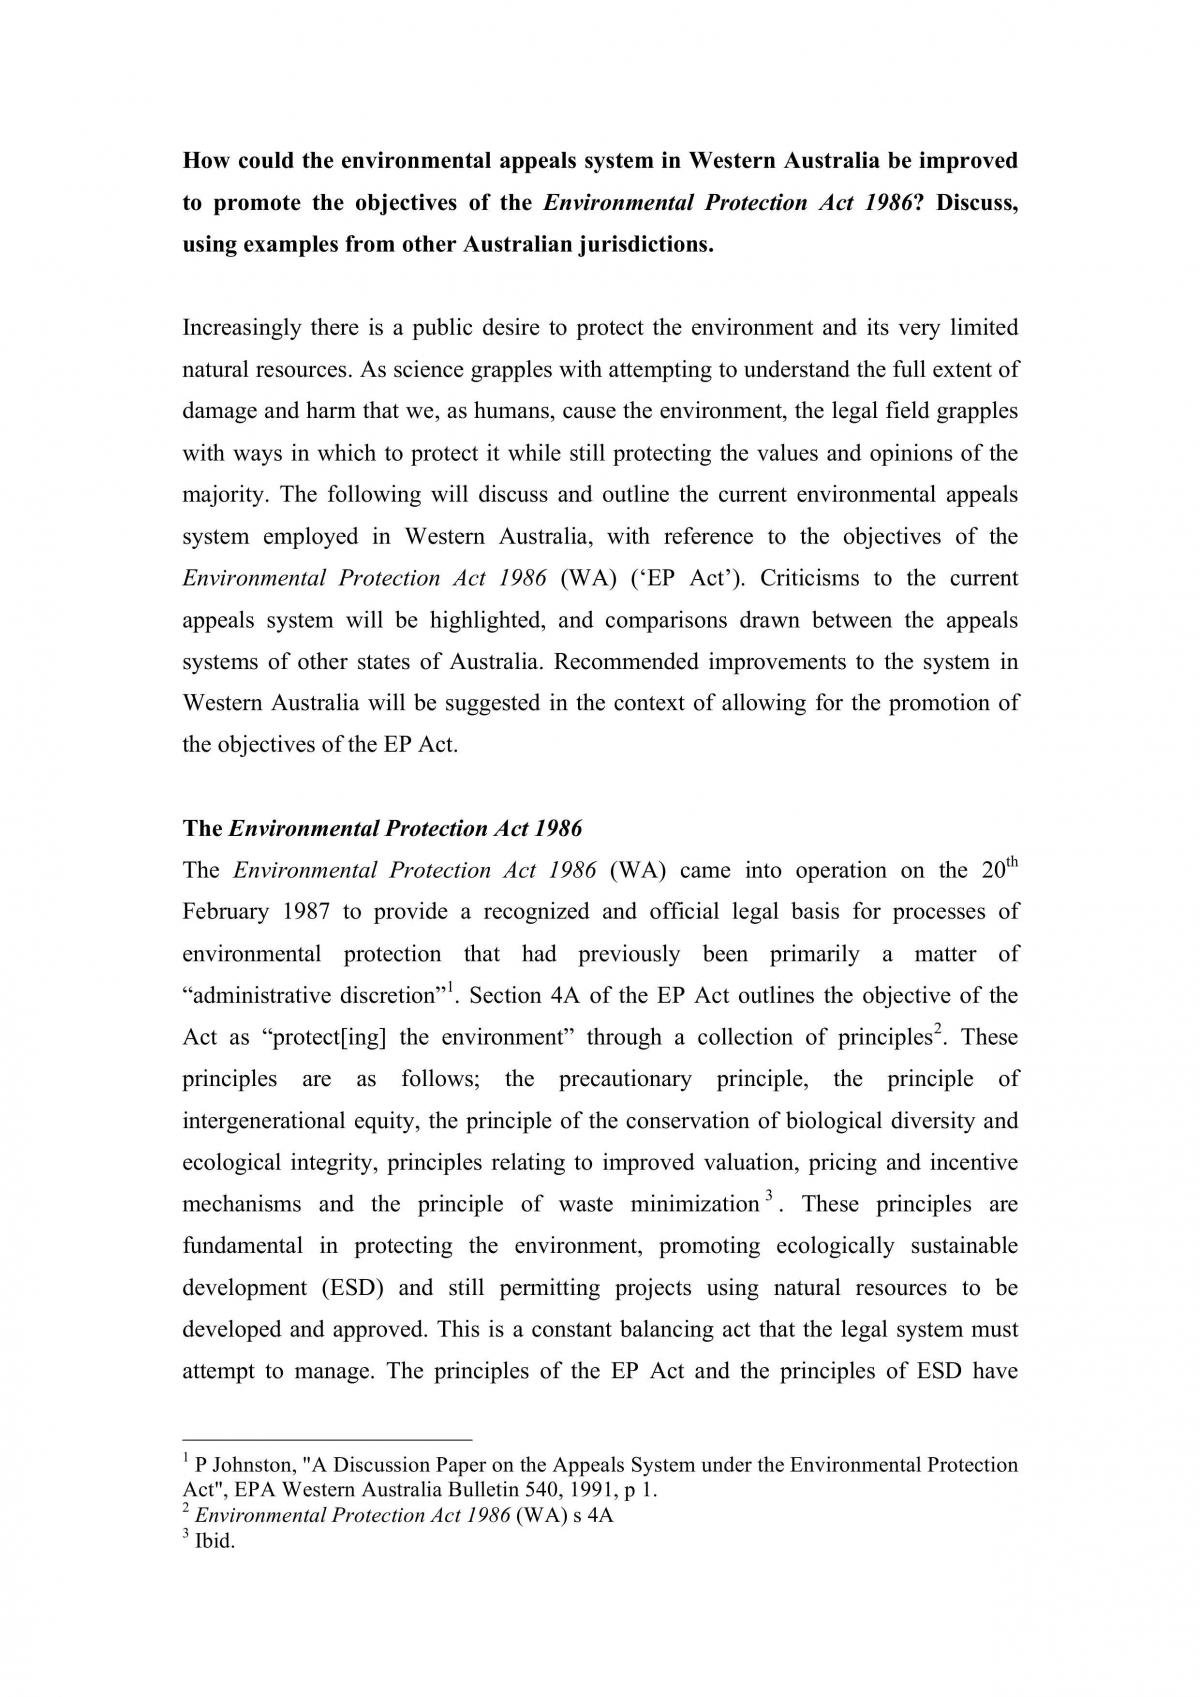 environmental law thesis pdf